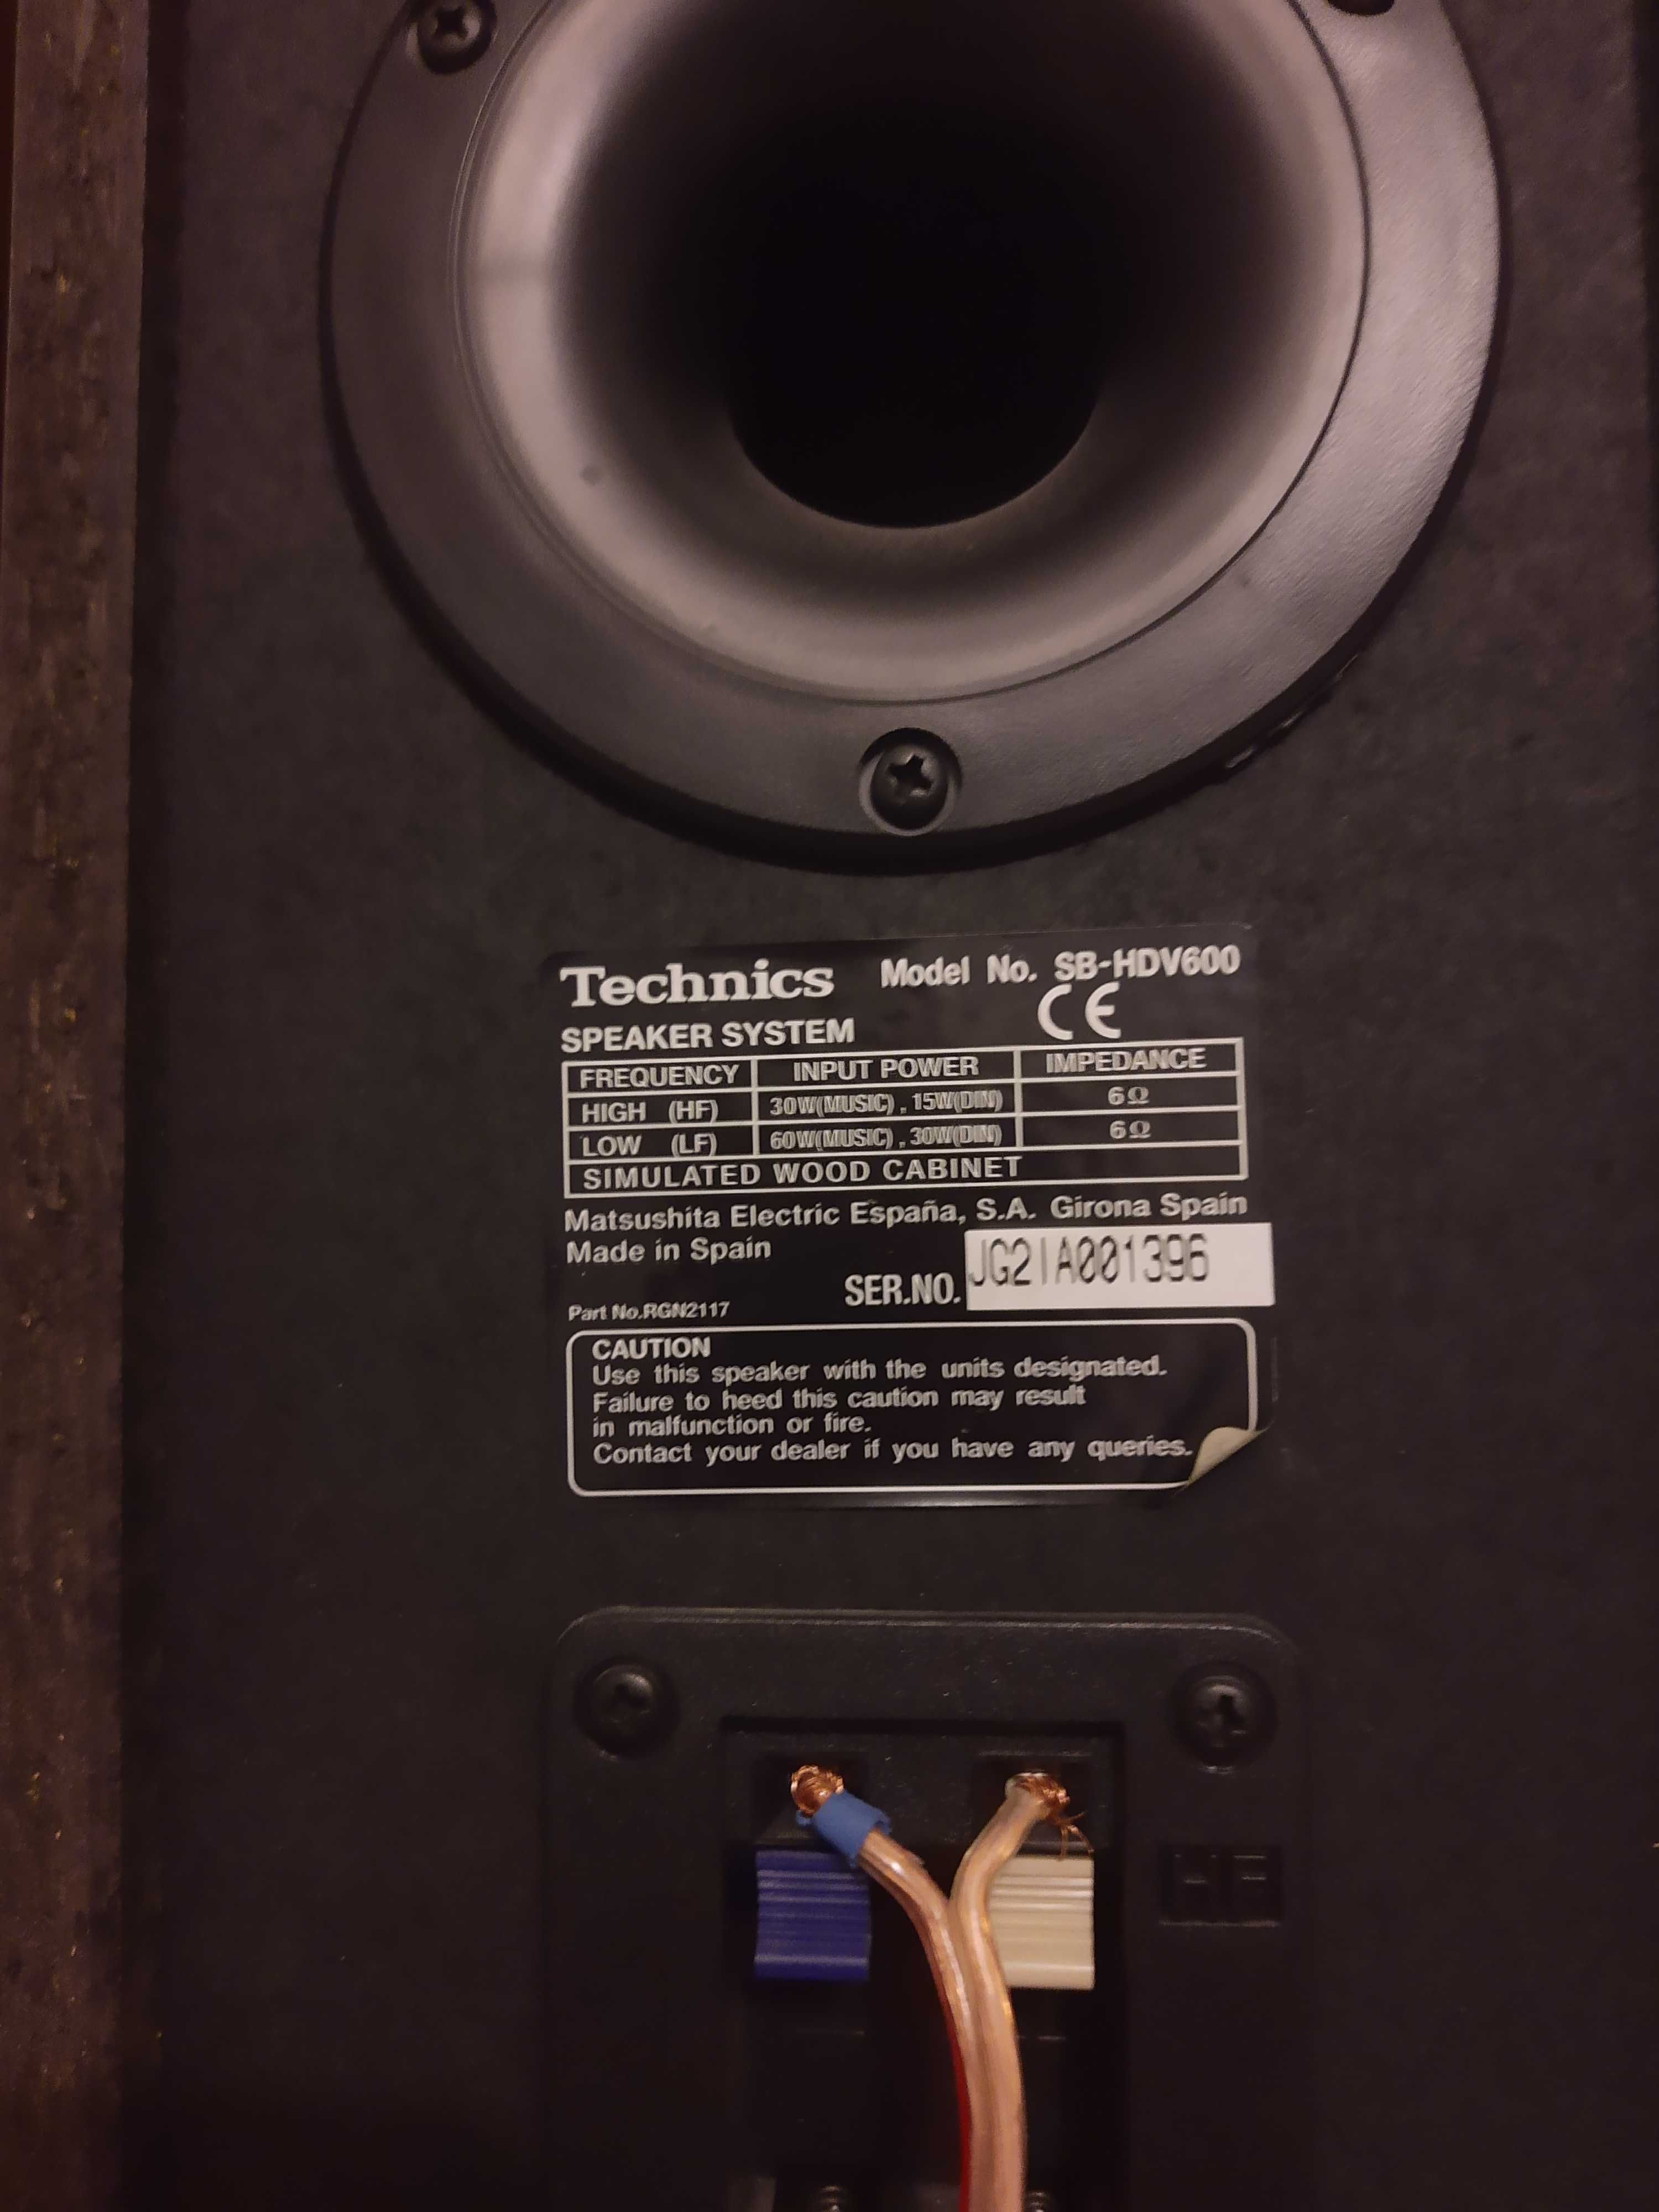 Wieża stereo Technics SC-HDV600